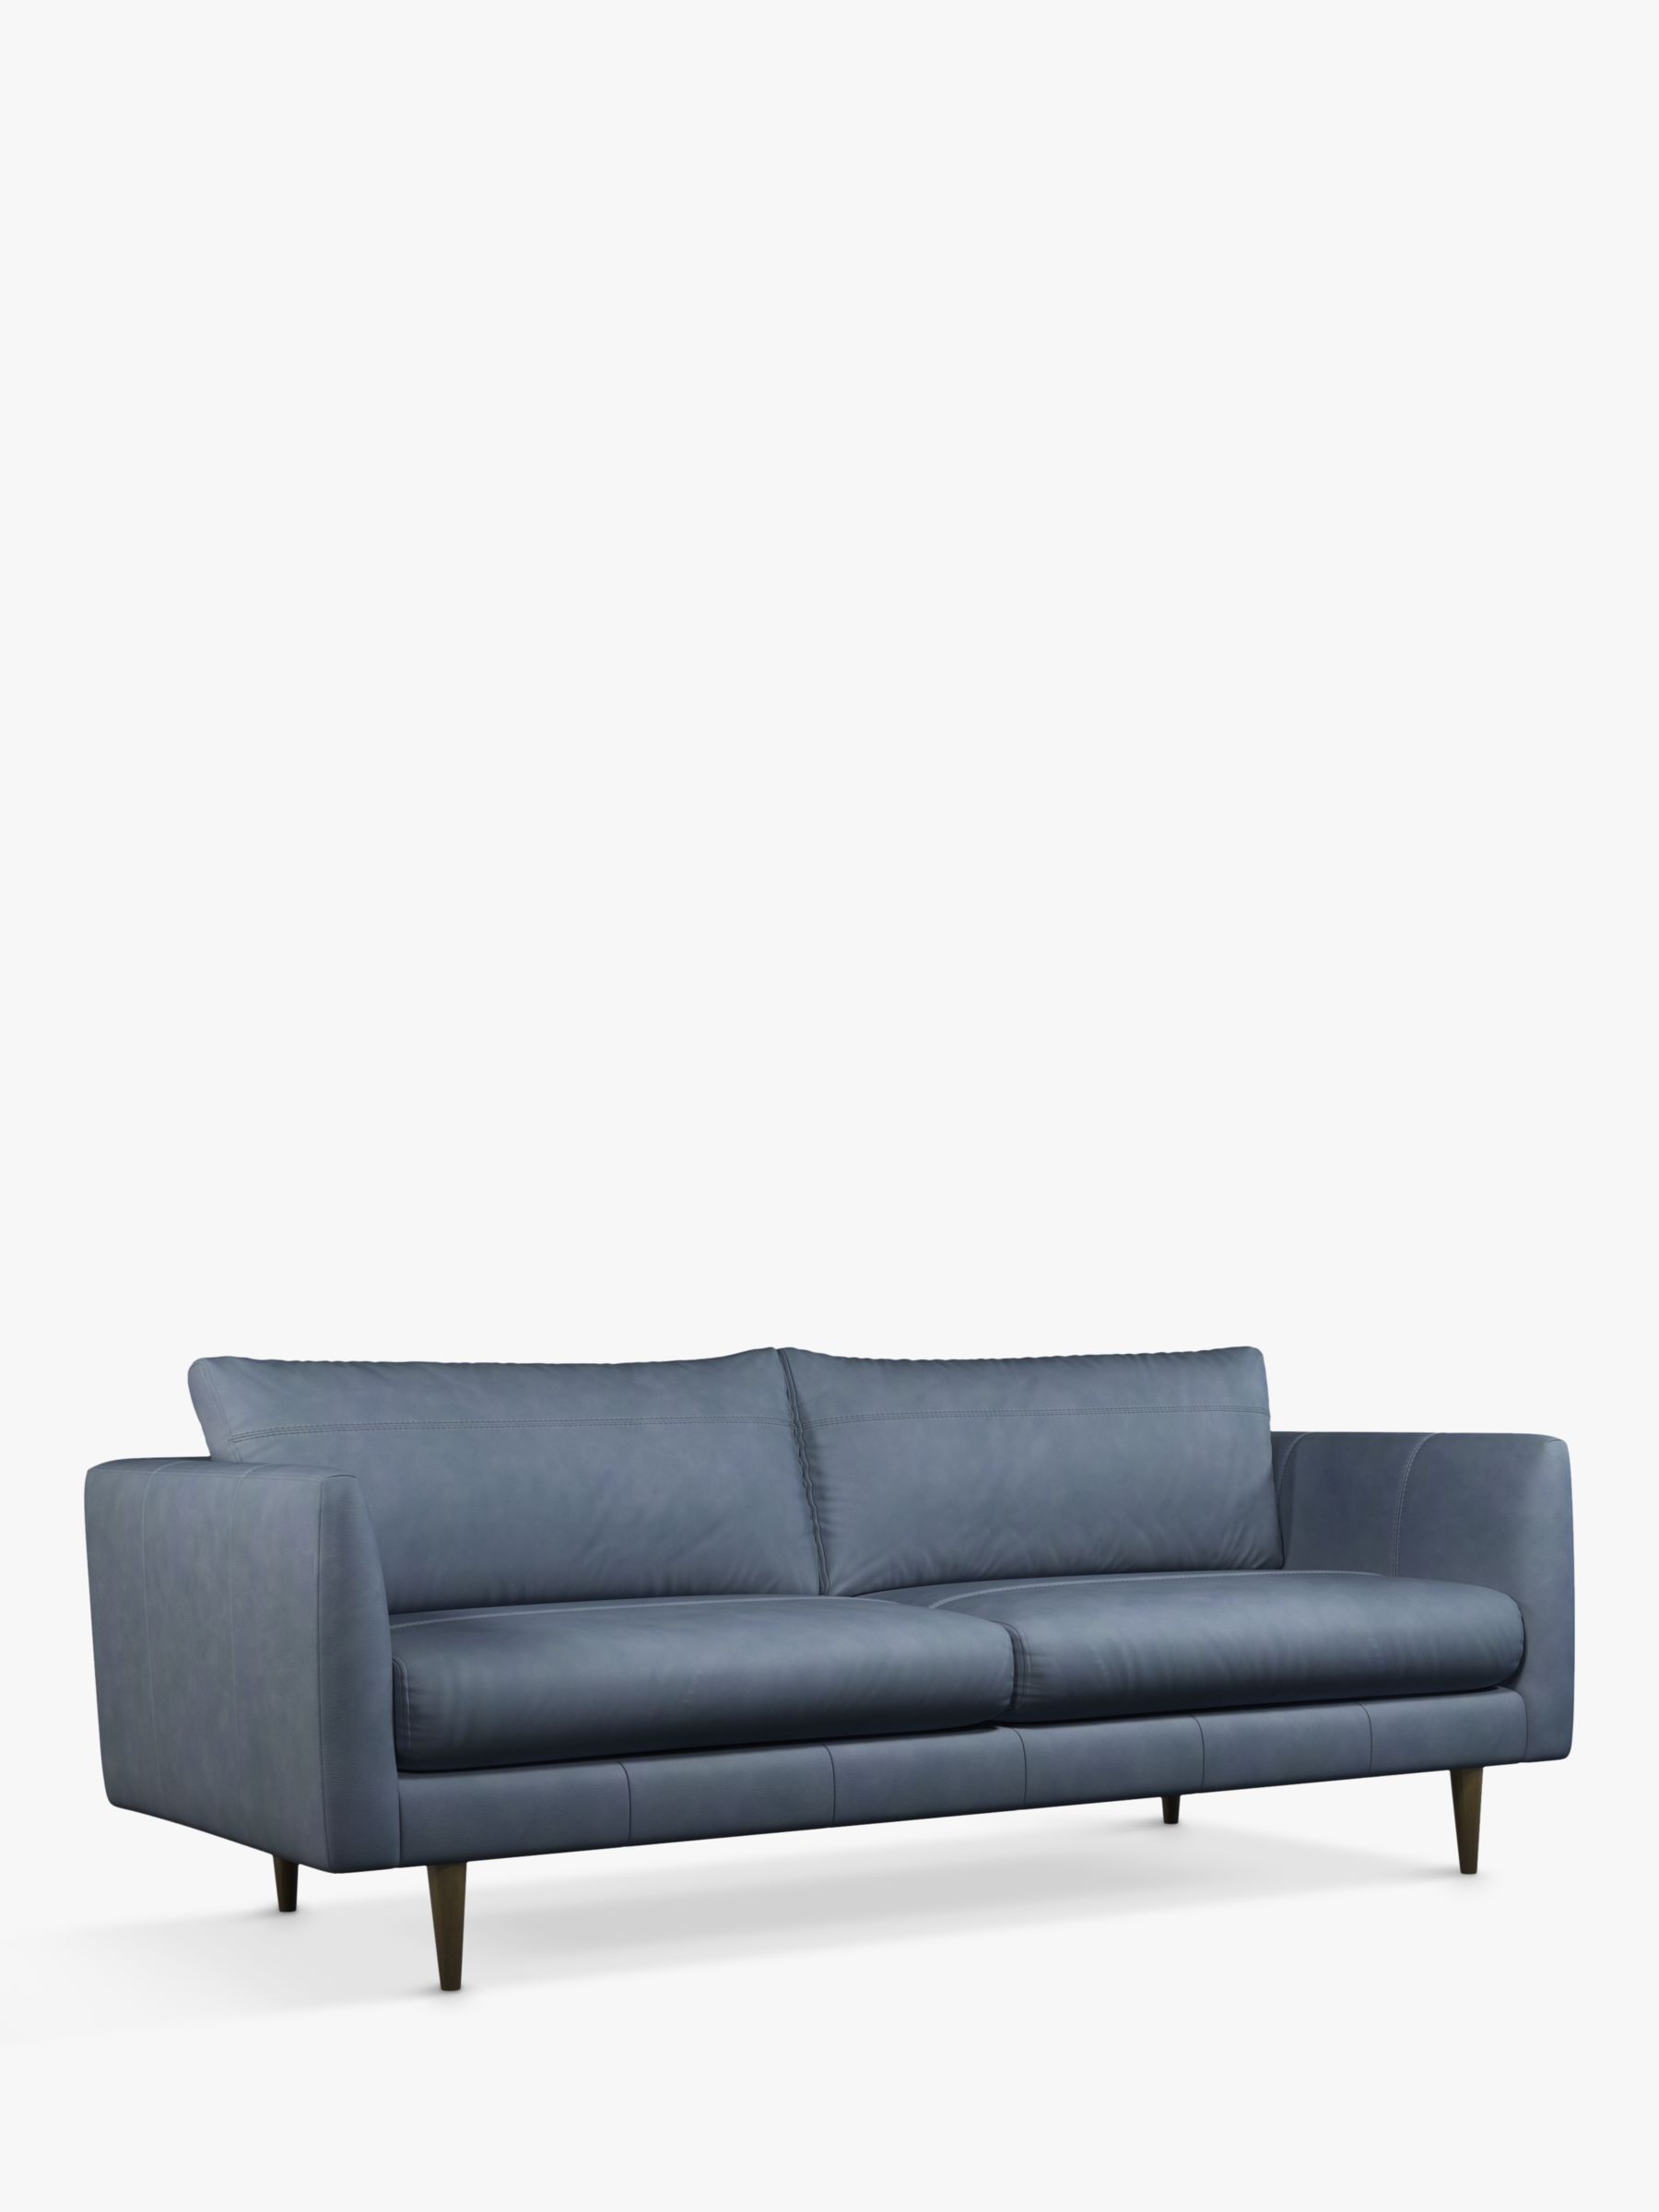 Latimer Range, John Lewis + Swoon Latimer Large 3 Seater Leather Sofa, Soft Touch Blue